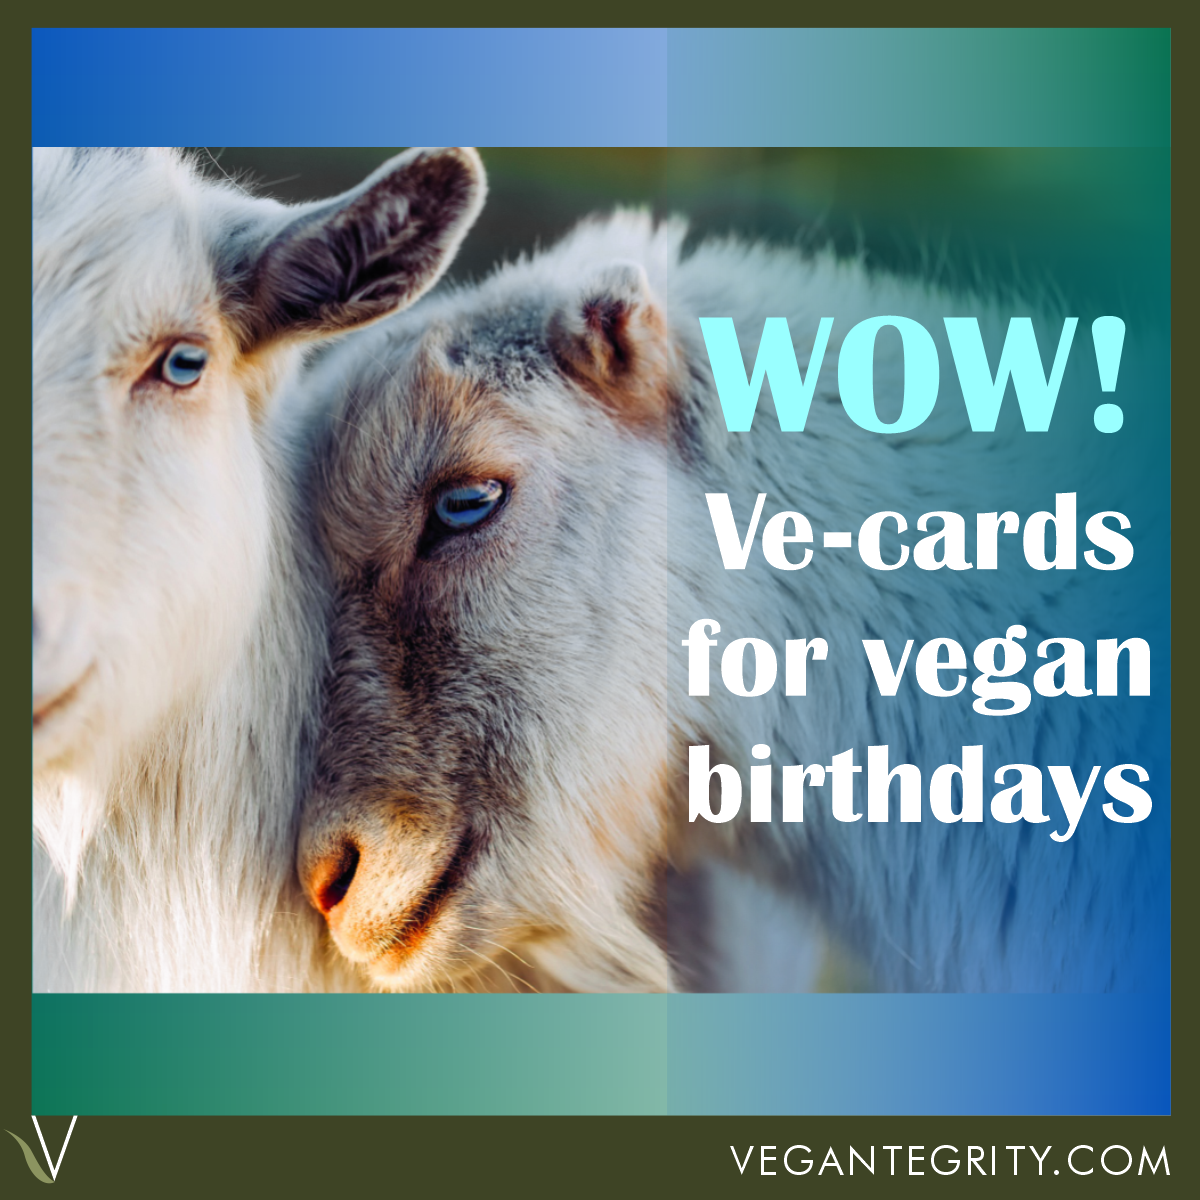 Ve-cards For Vegan Birthdays